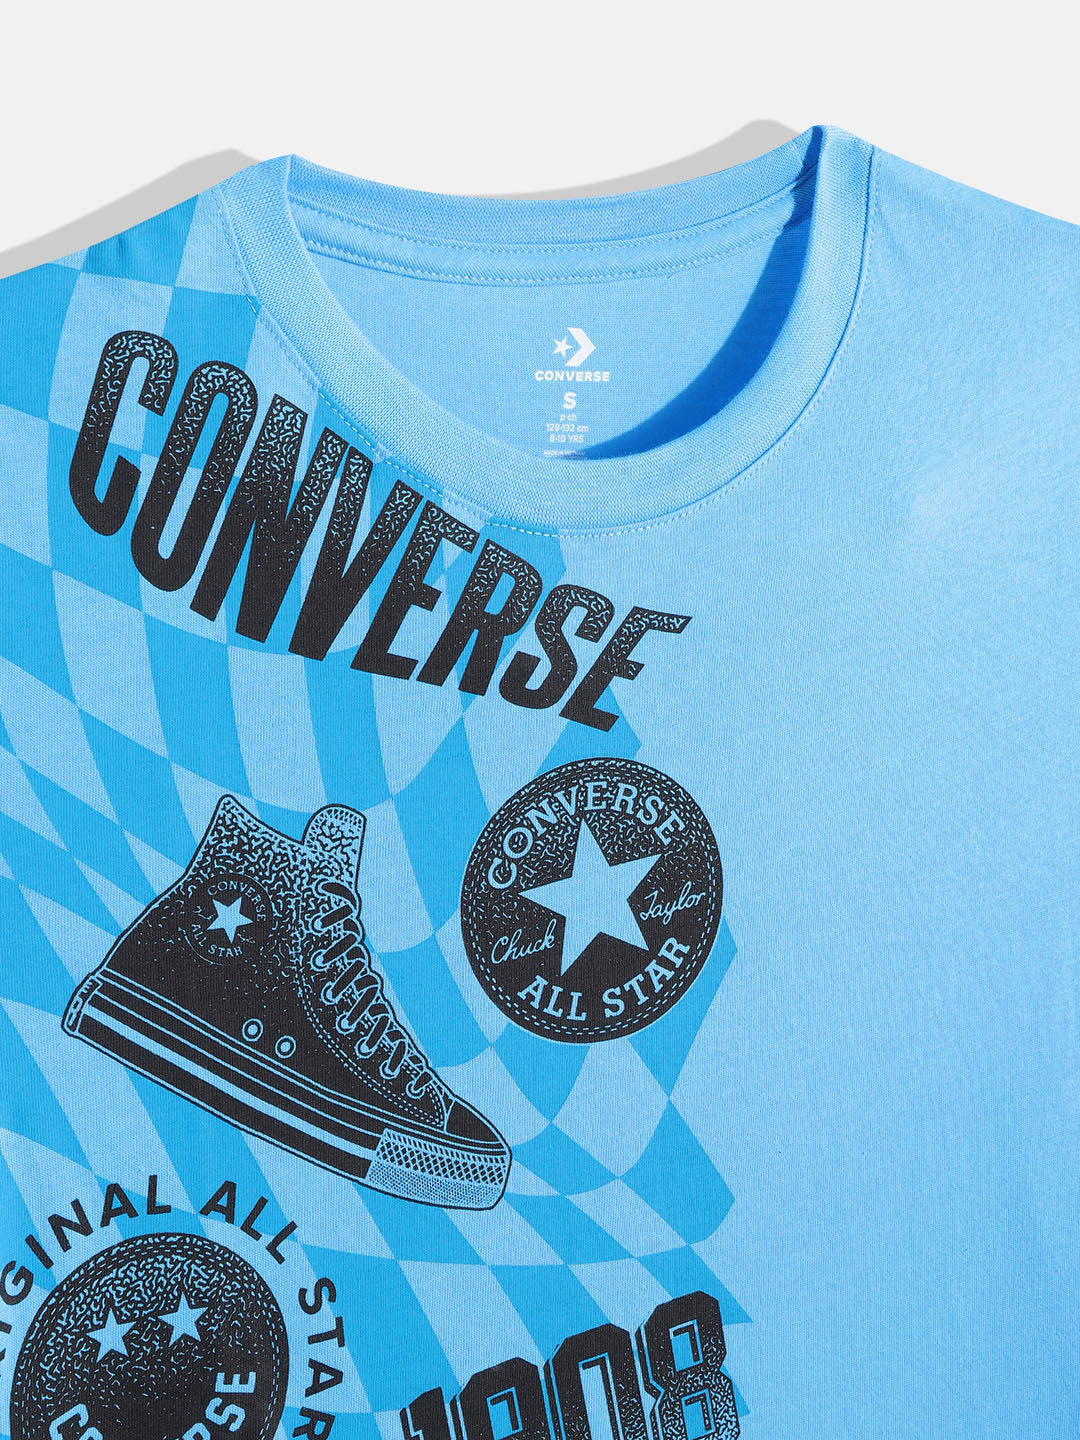 Converse Distressed Multi Logo Tee T Shirt Converse   